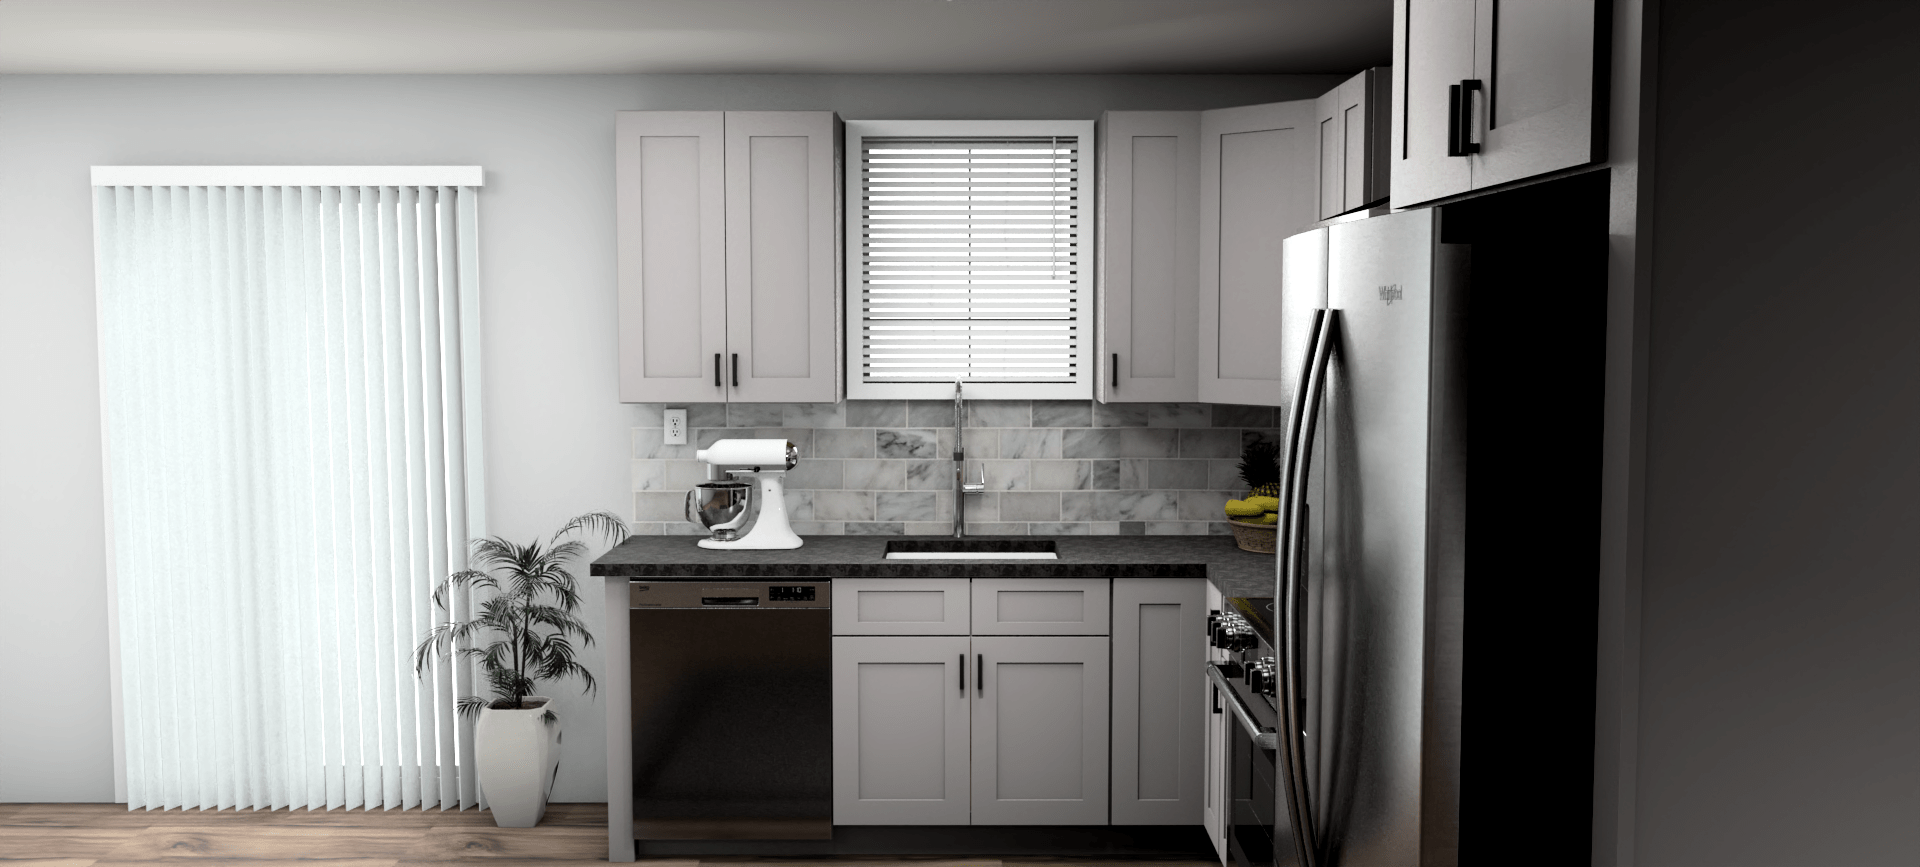 Fabuwood Allure Galaxy Nickel 8 x 12 L Shaped Kitchen Side Layout Photo